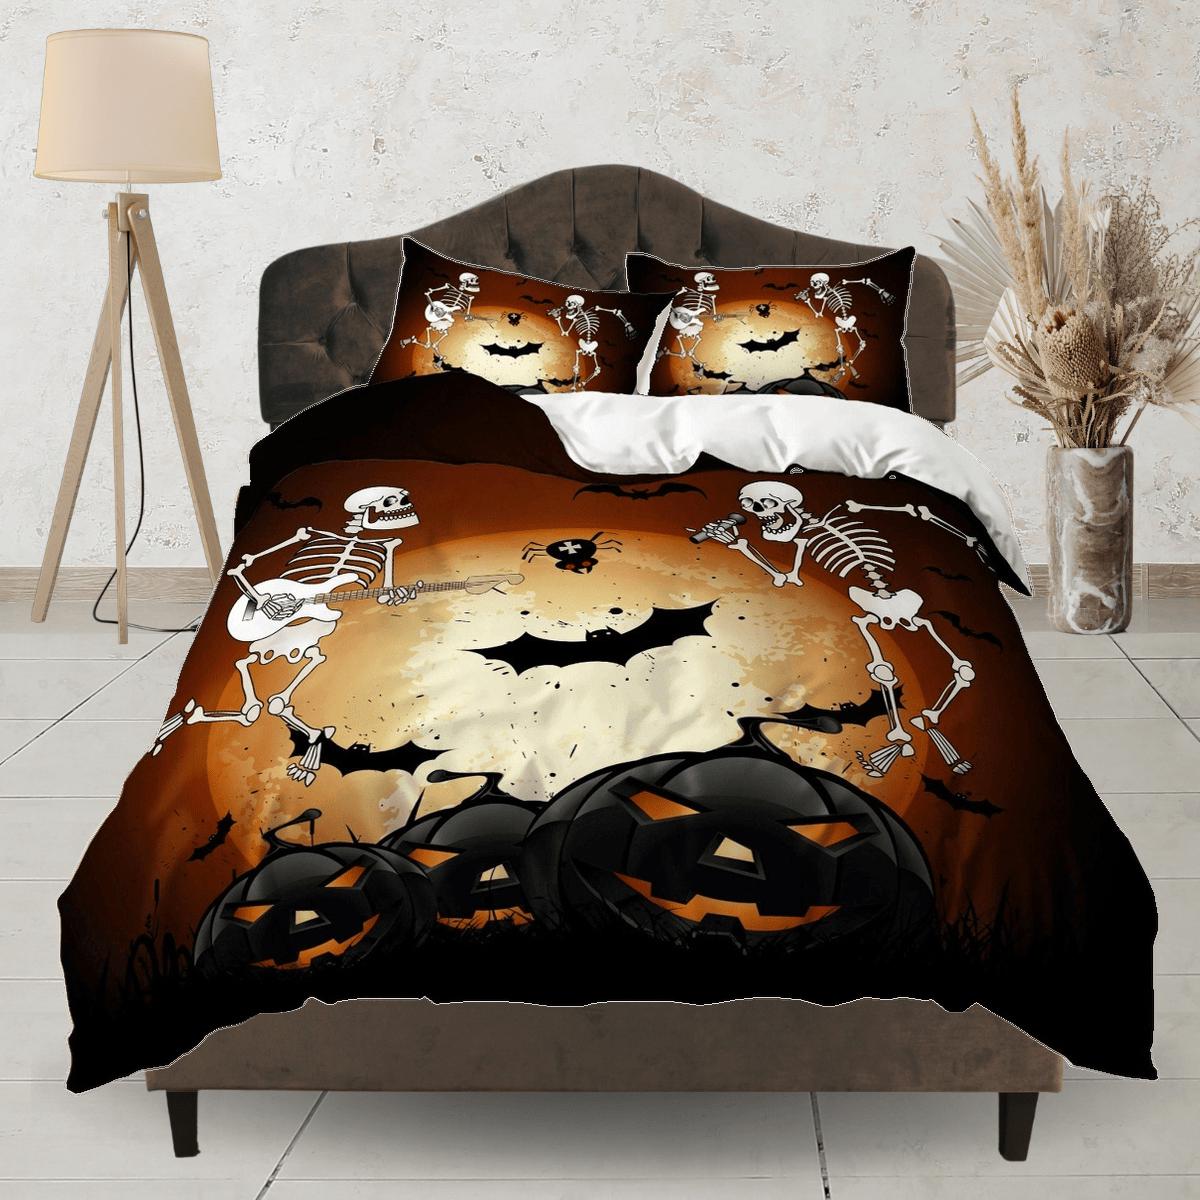 daintyduvet Skeleton and pumpkin halloween bedding & pillowcase, brown duvet cover set dorm bedding, halloween gift, nursery toddler bedding